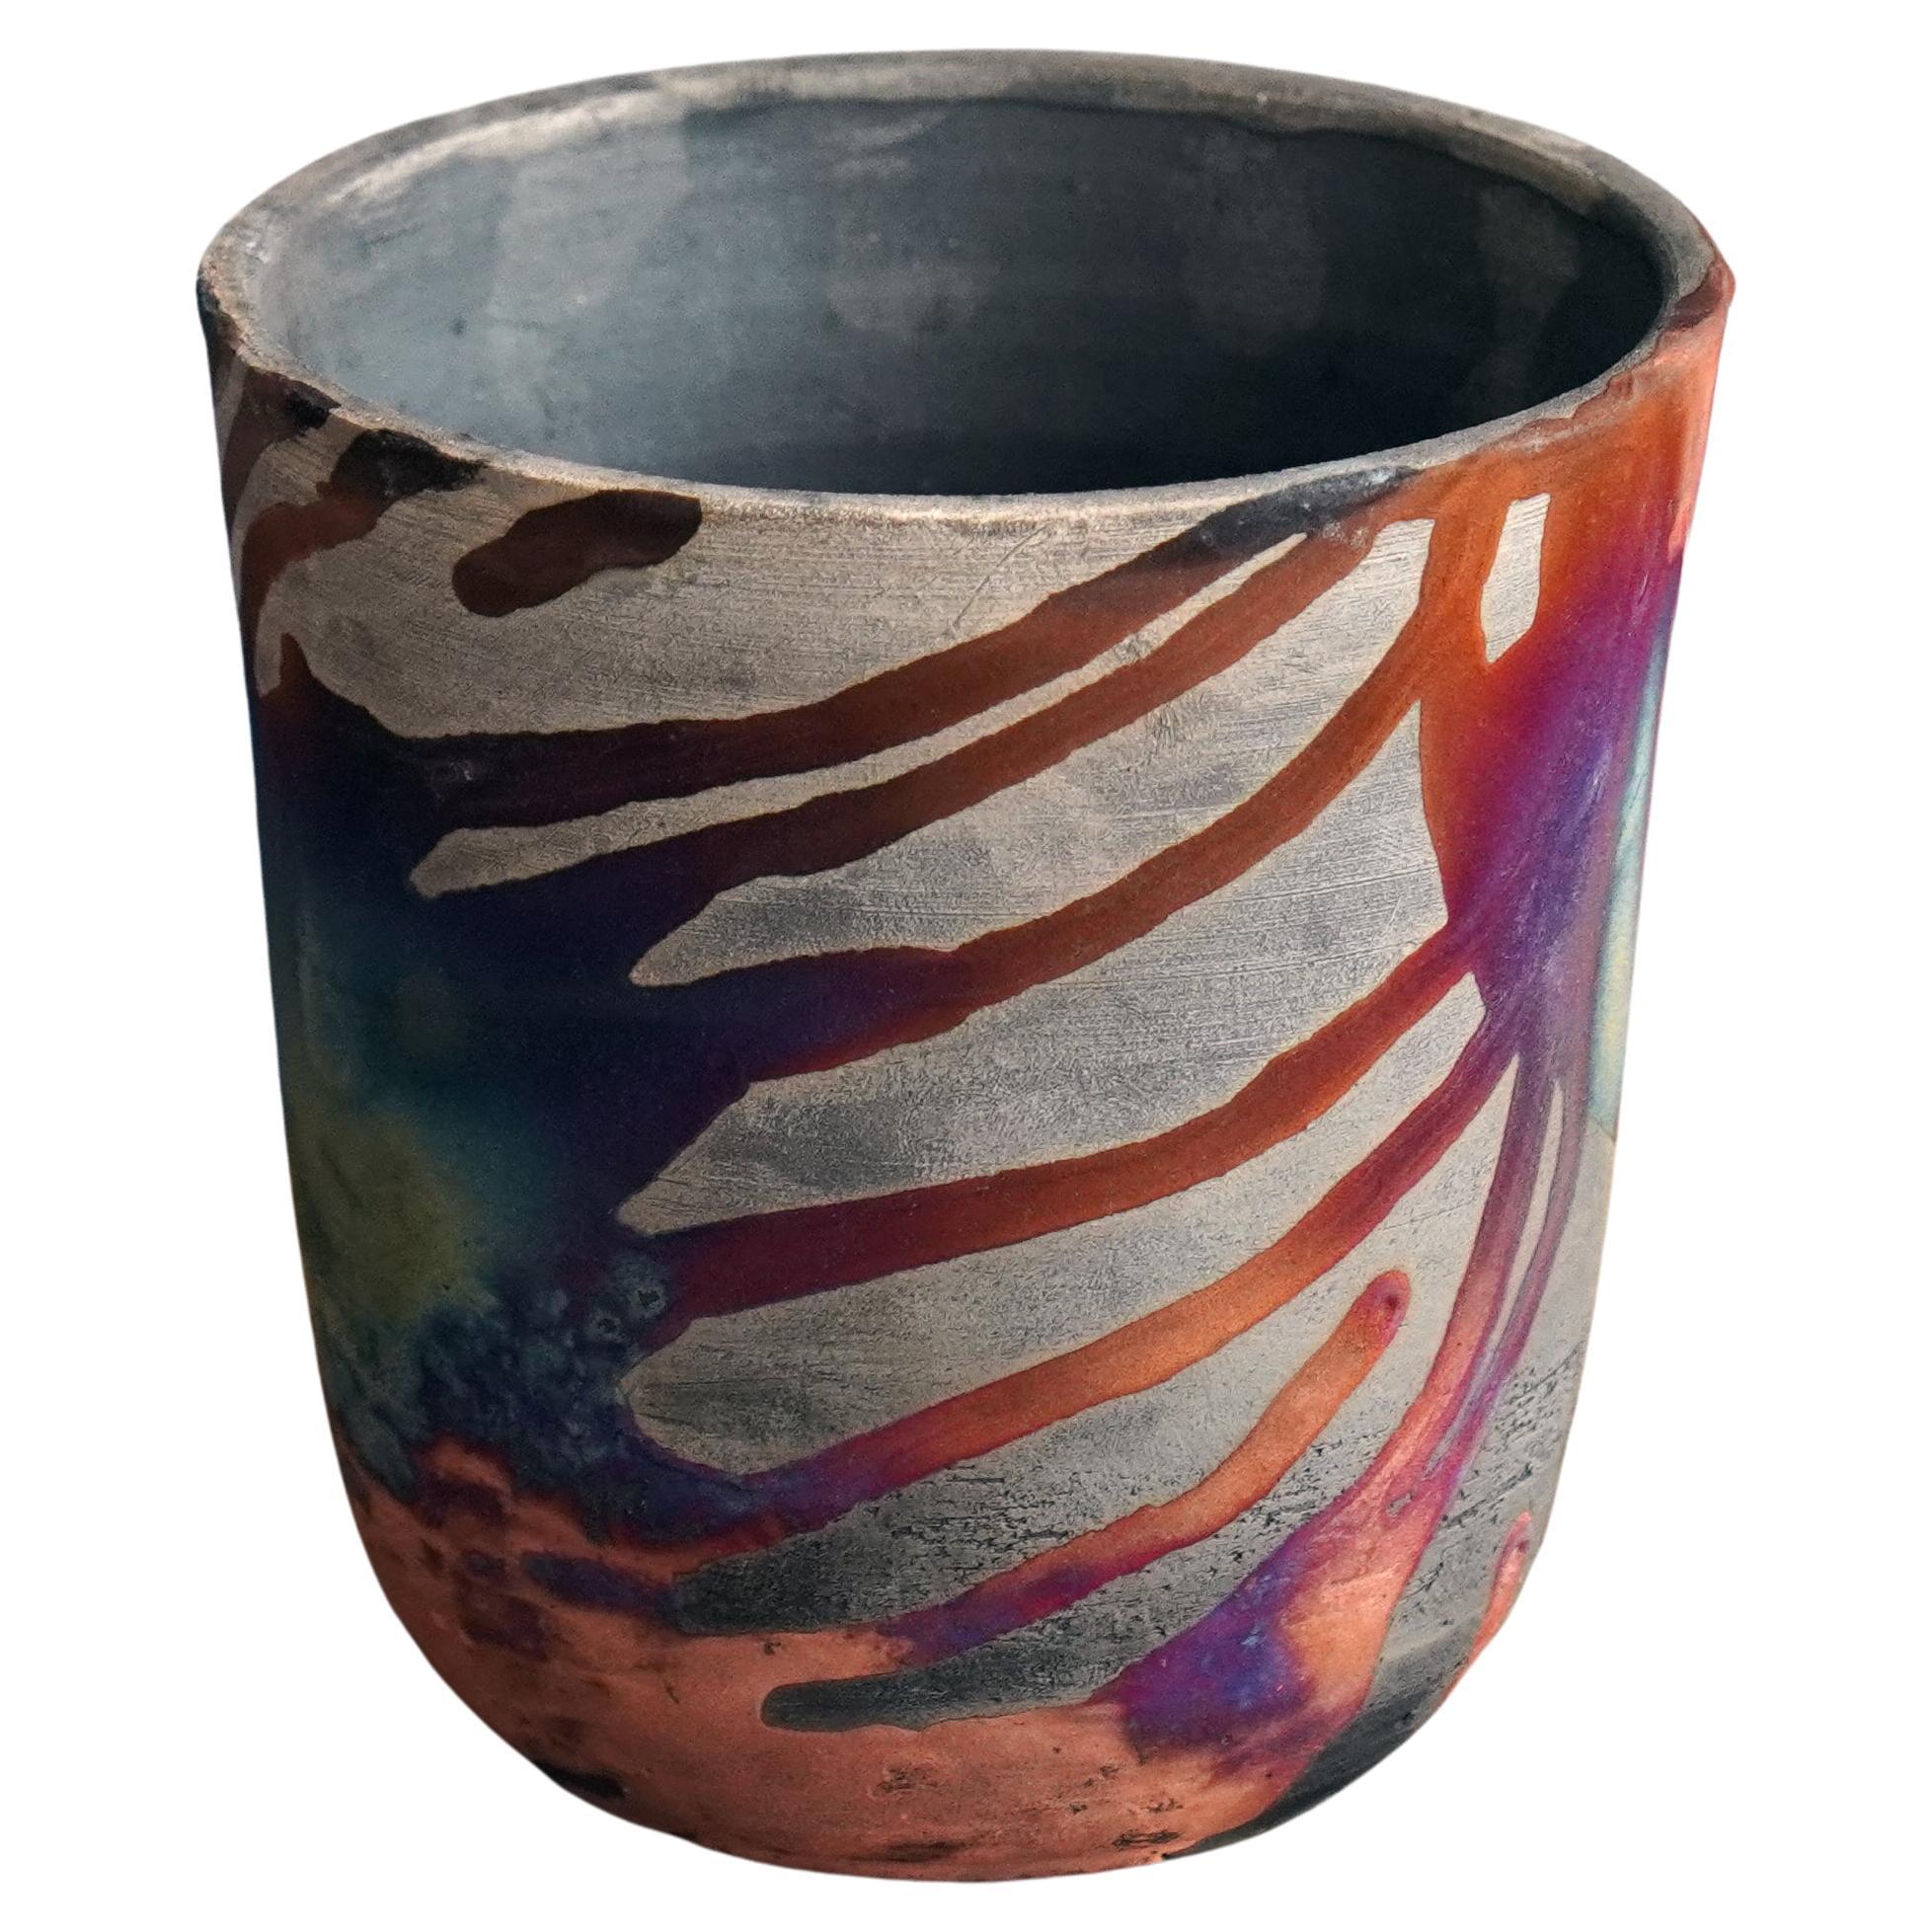 Shinsen Raku Pottery Vase - Carbon Copper - Handmade Ceramic Home Decor Gift For Sale